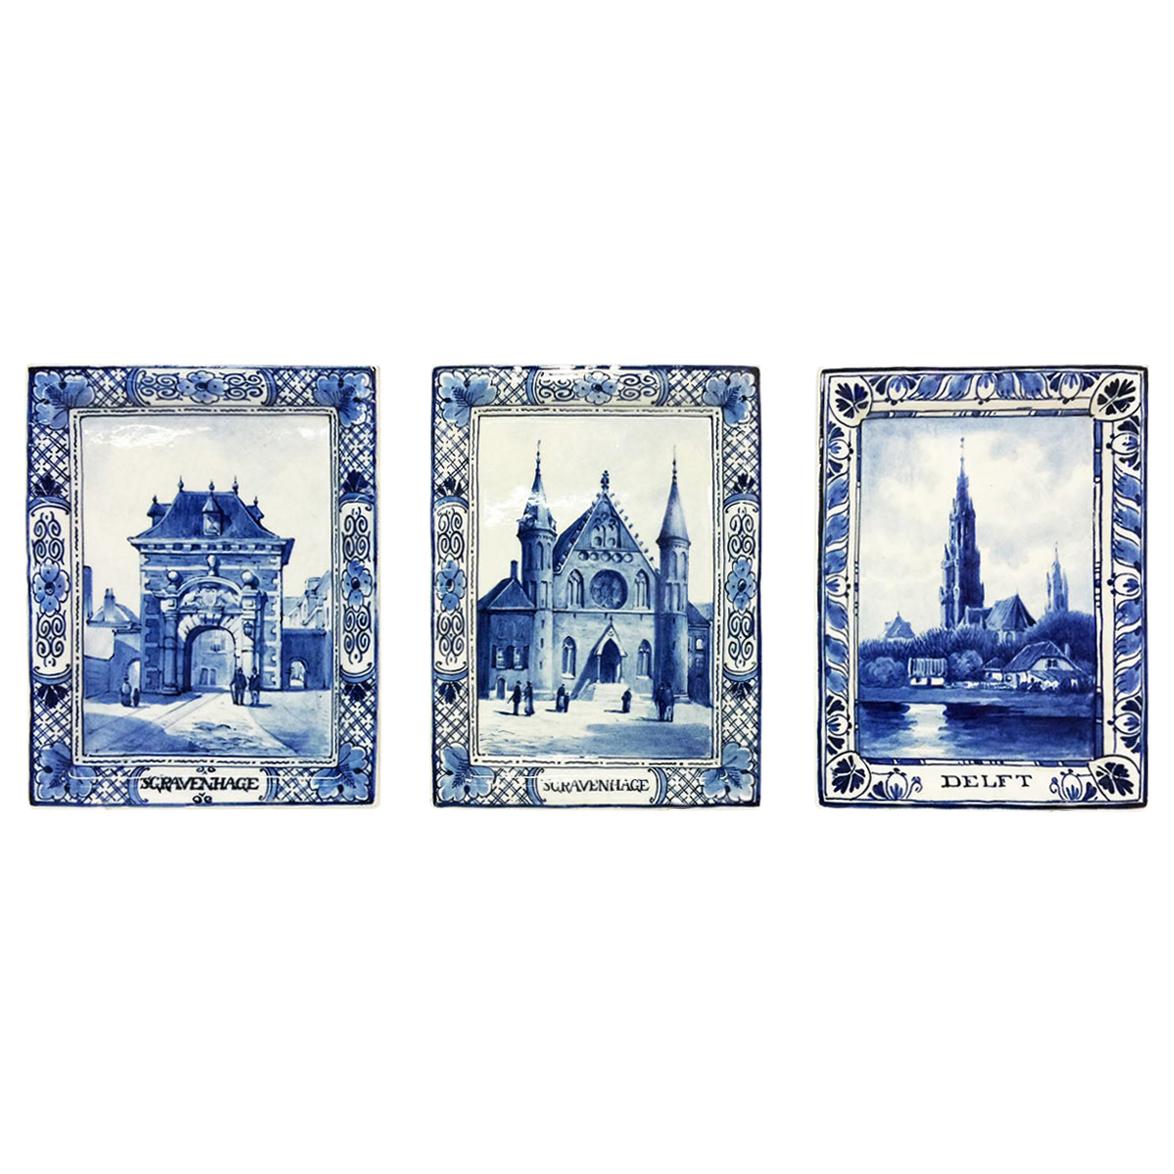 Delft Porceleyne Fles Small Wall Plates, the Hague and Delft, 1894 and 1912